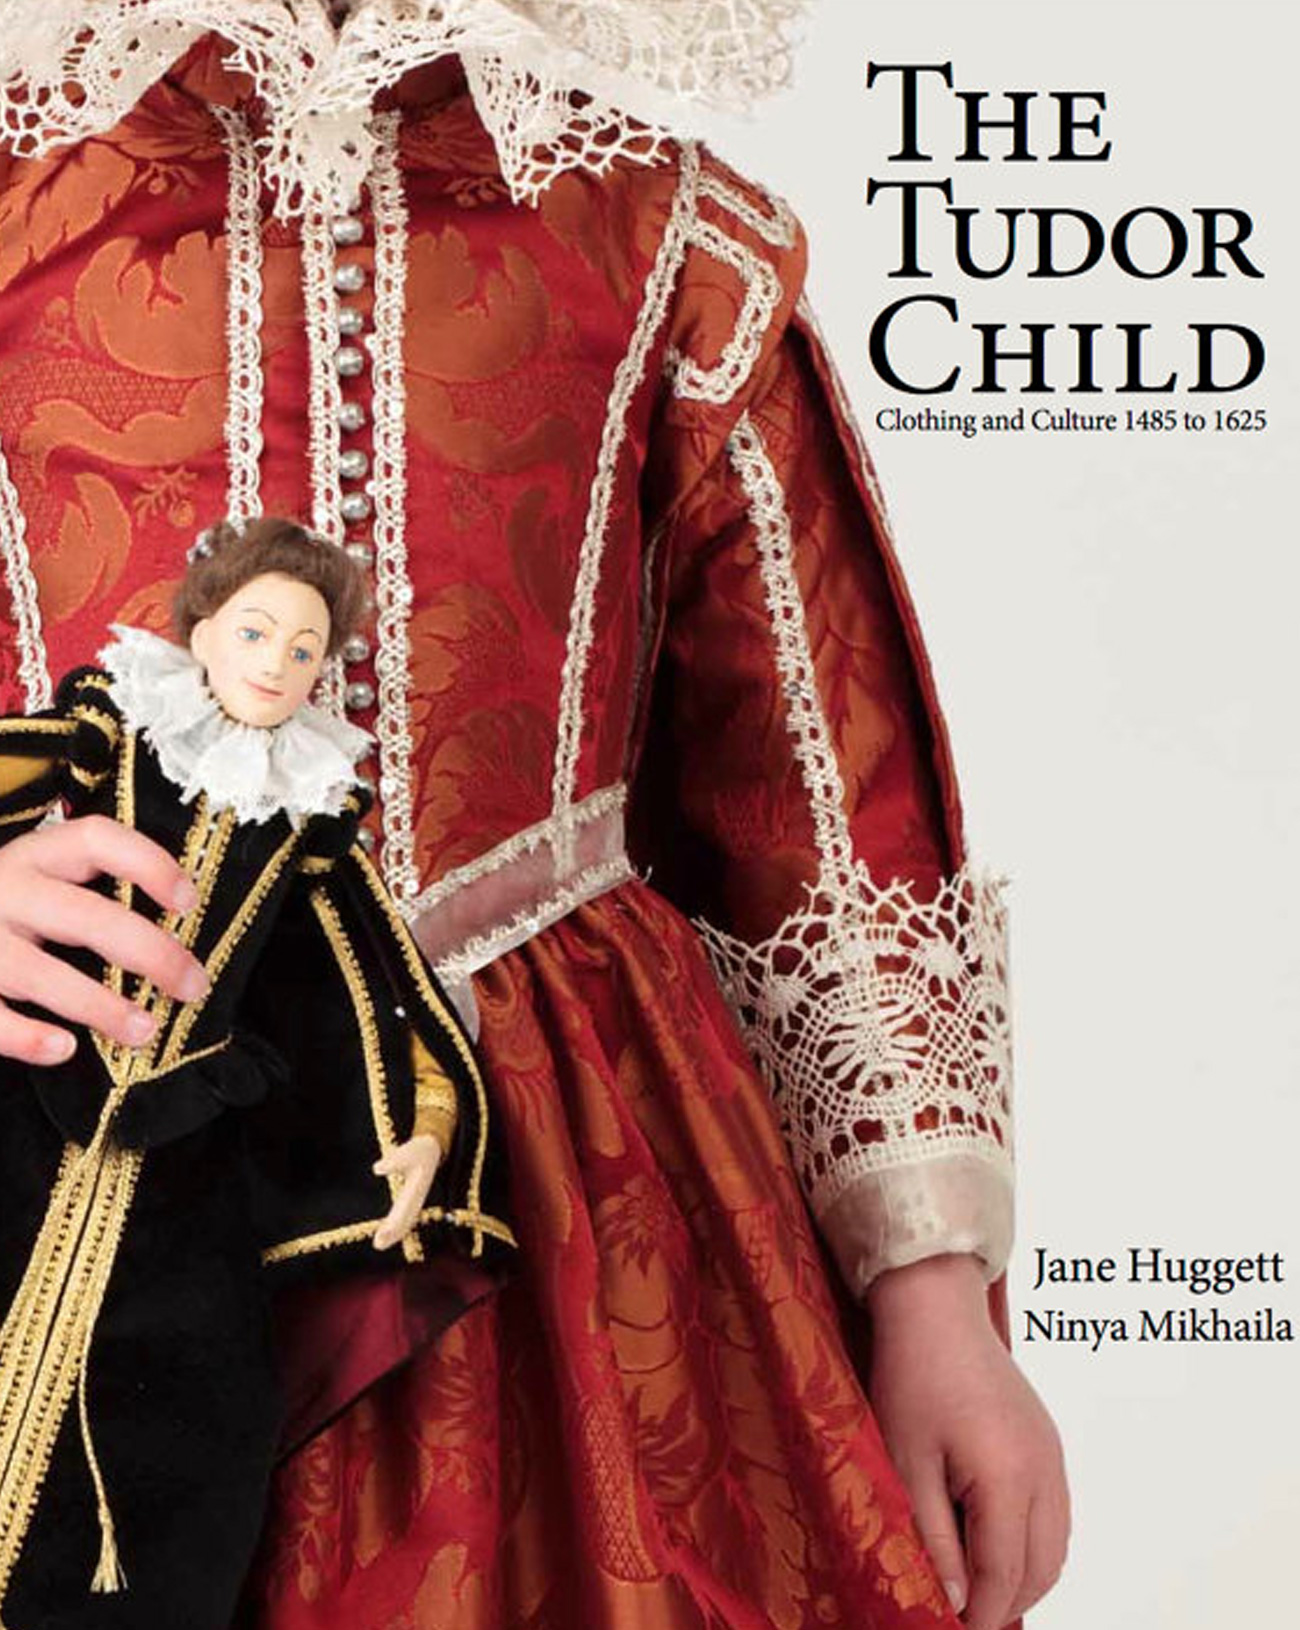 The Tudor Child